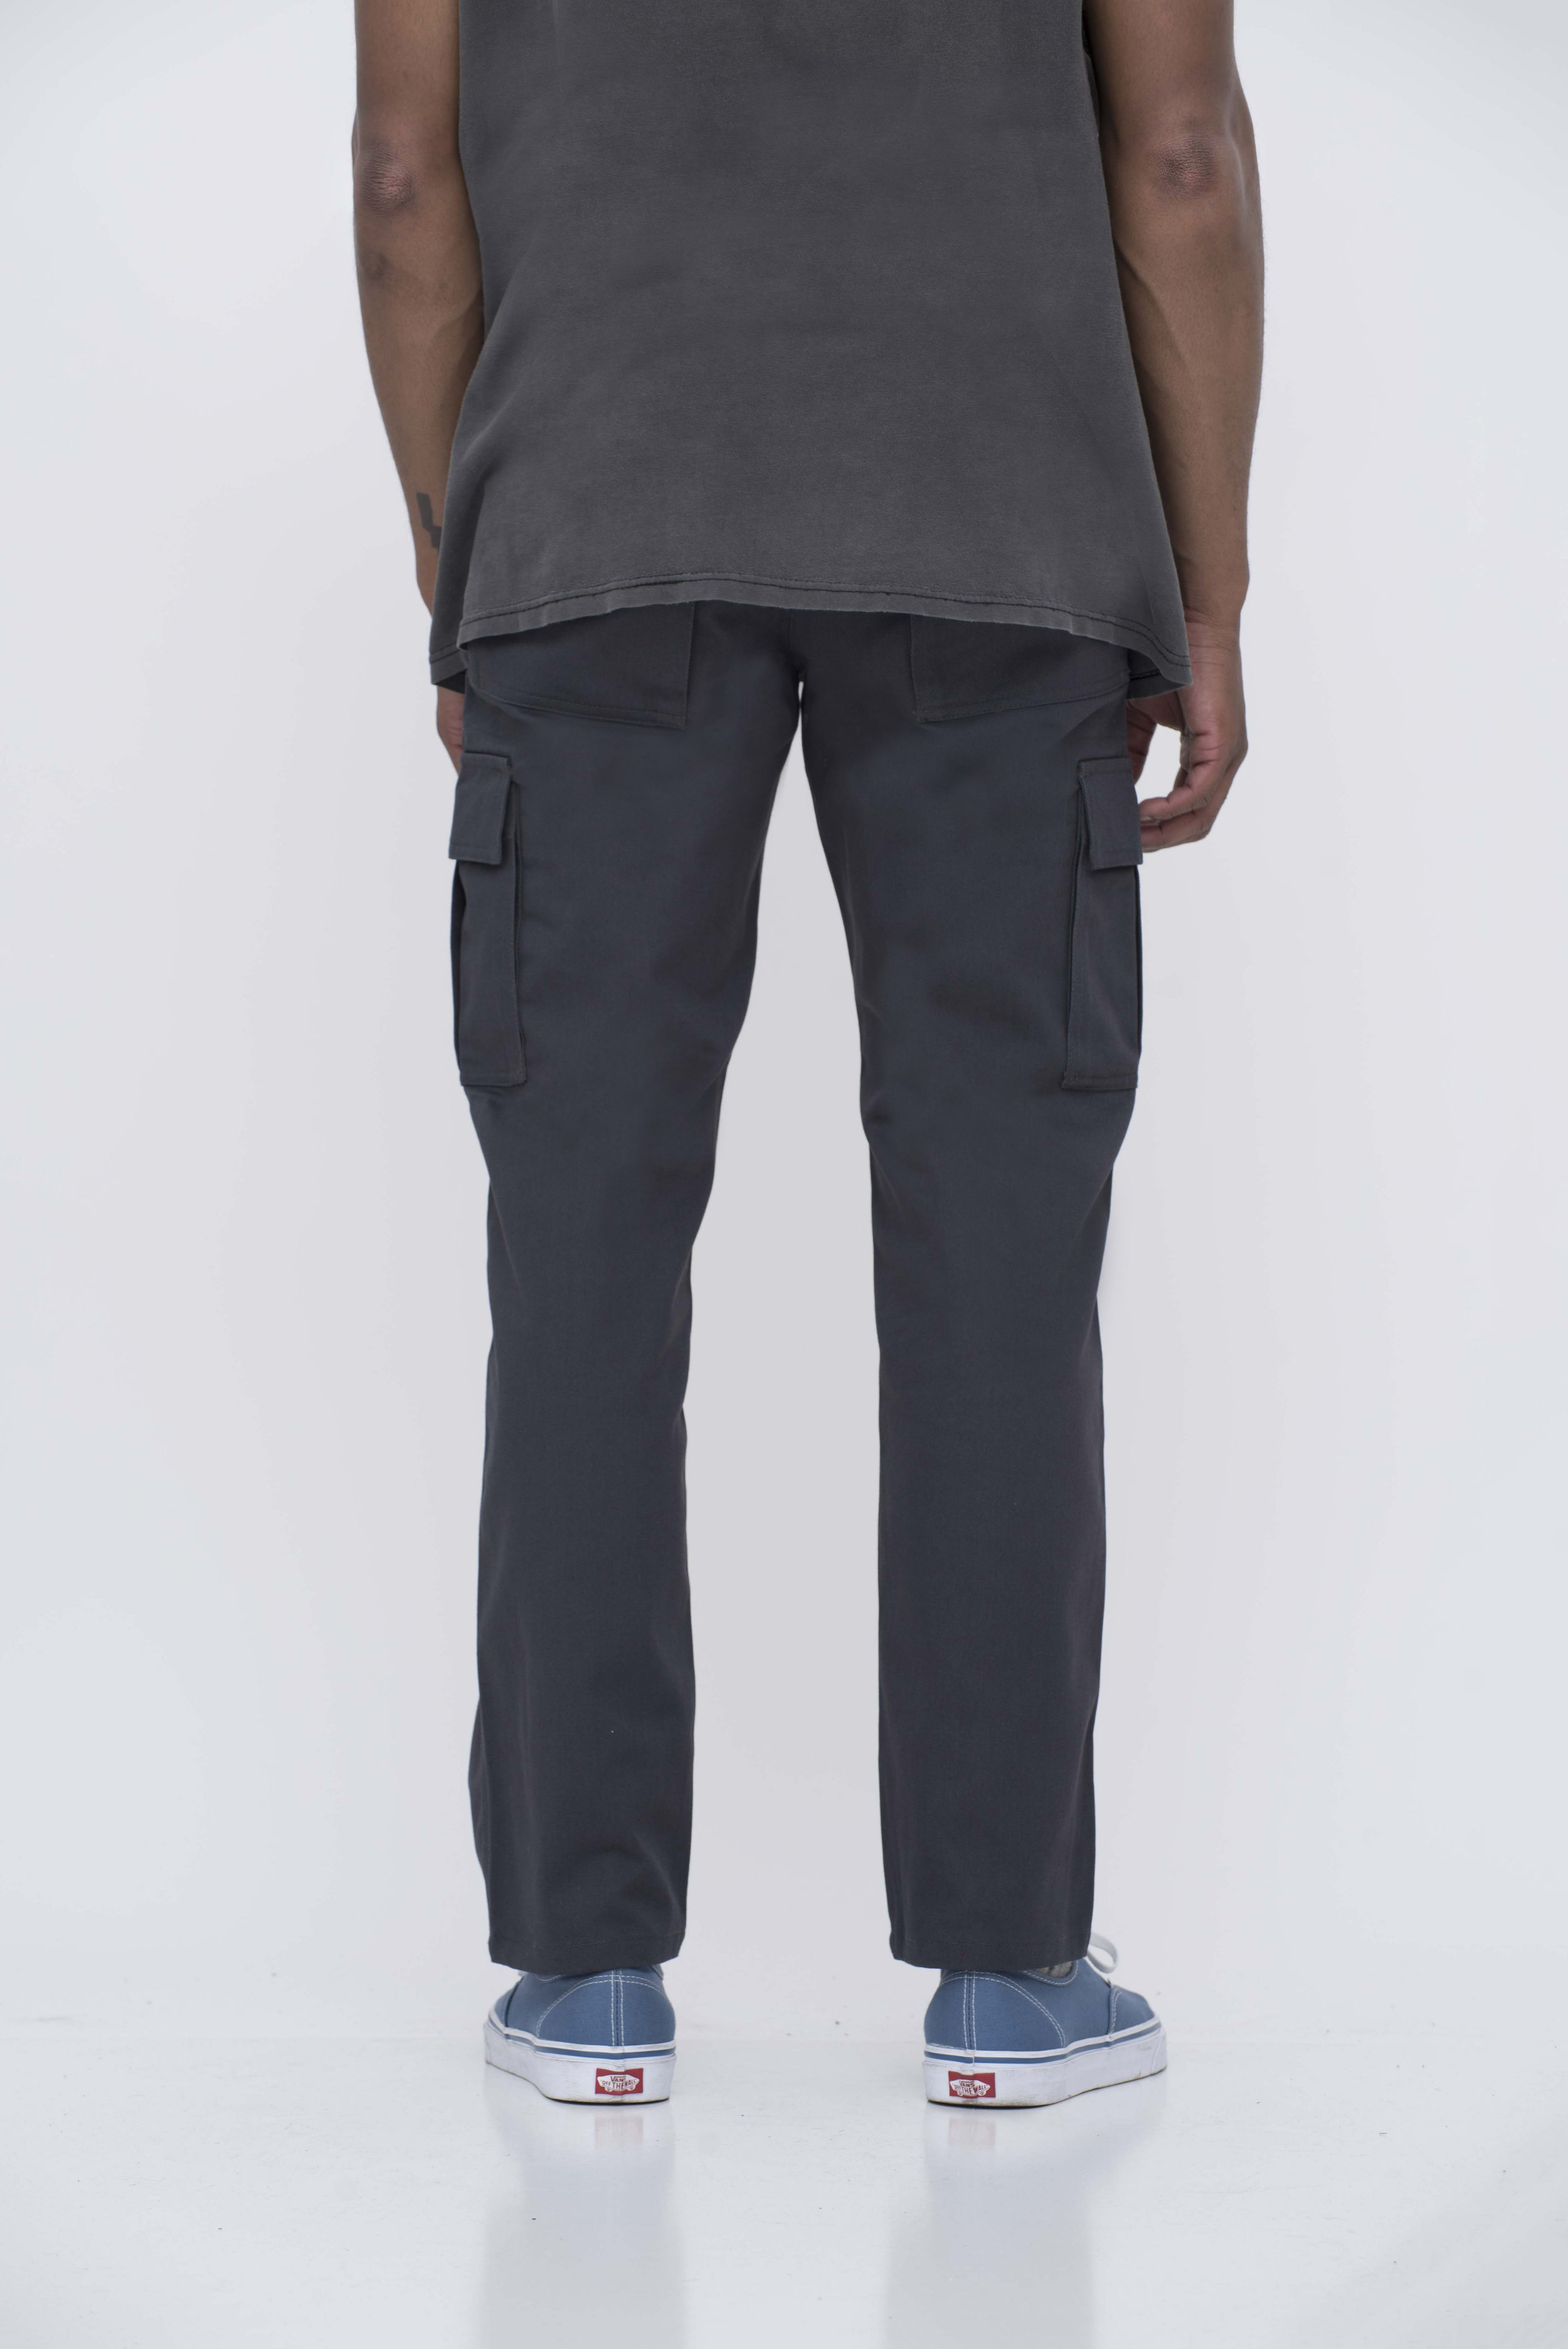 charcoal gray cargo pants